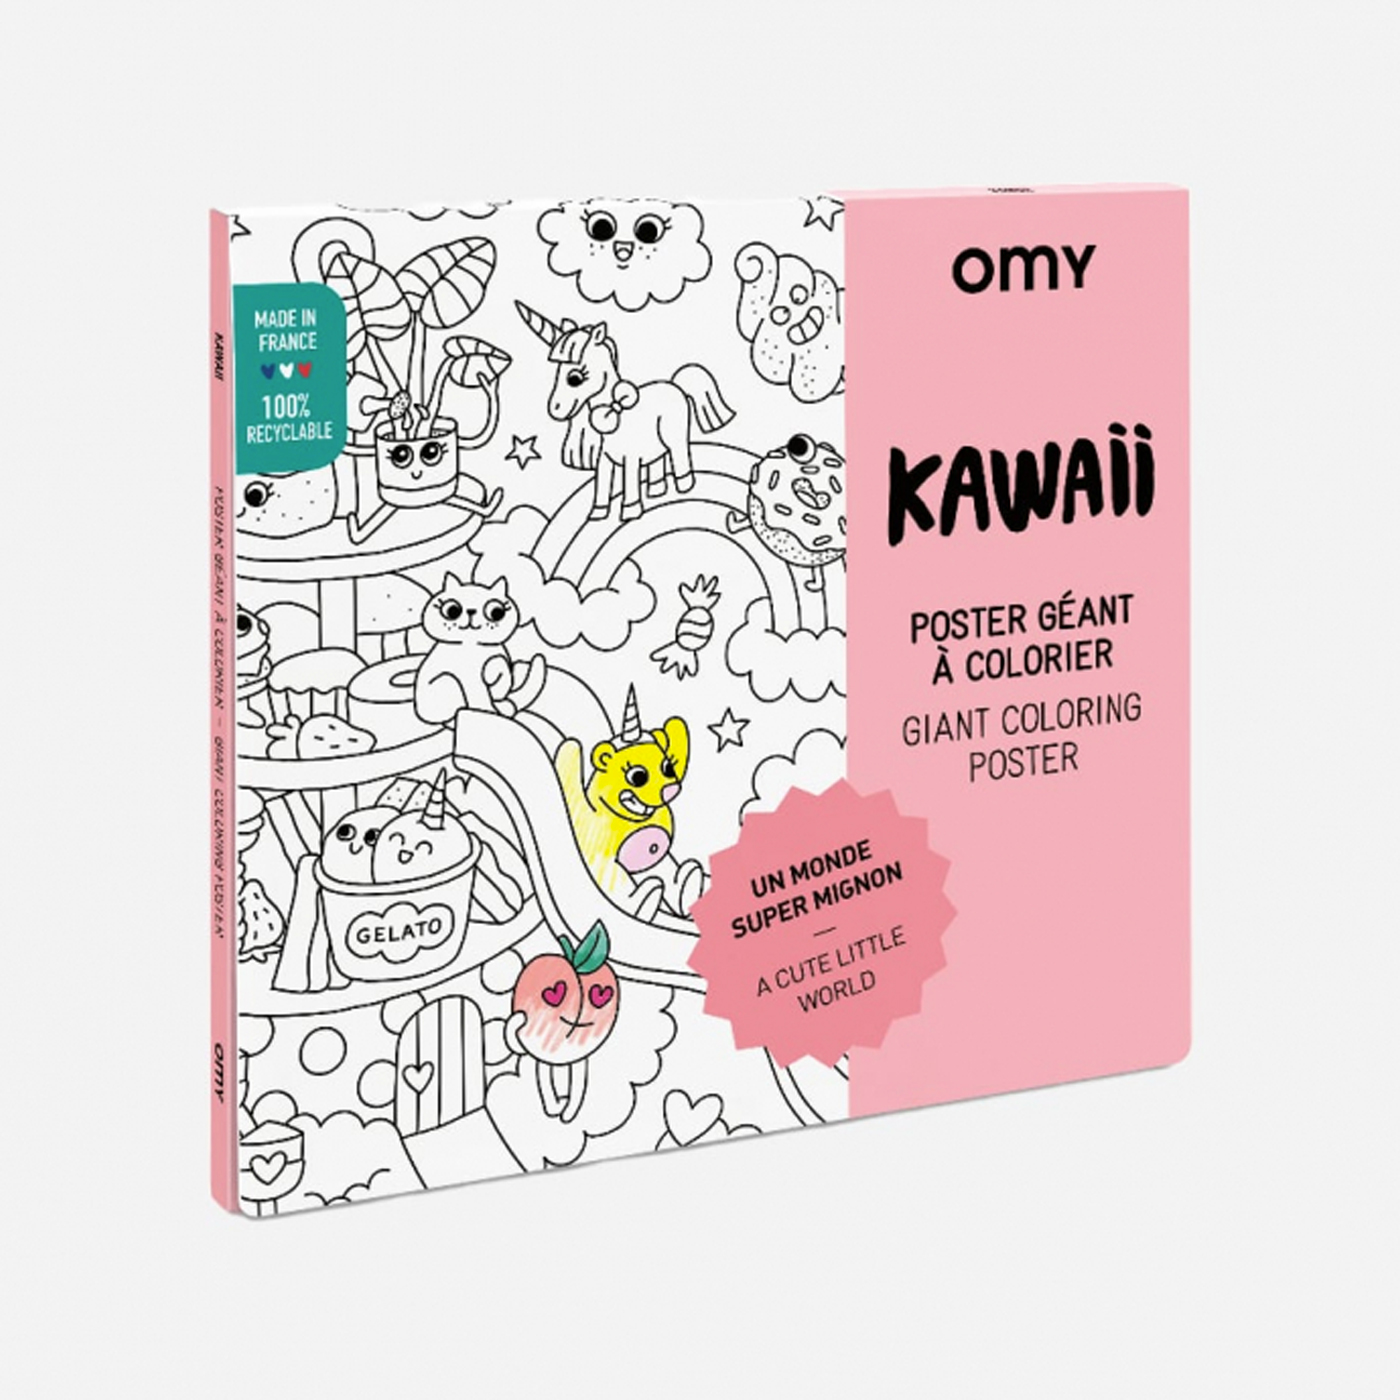  Omy Coloring Poster  | Kawaii